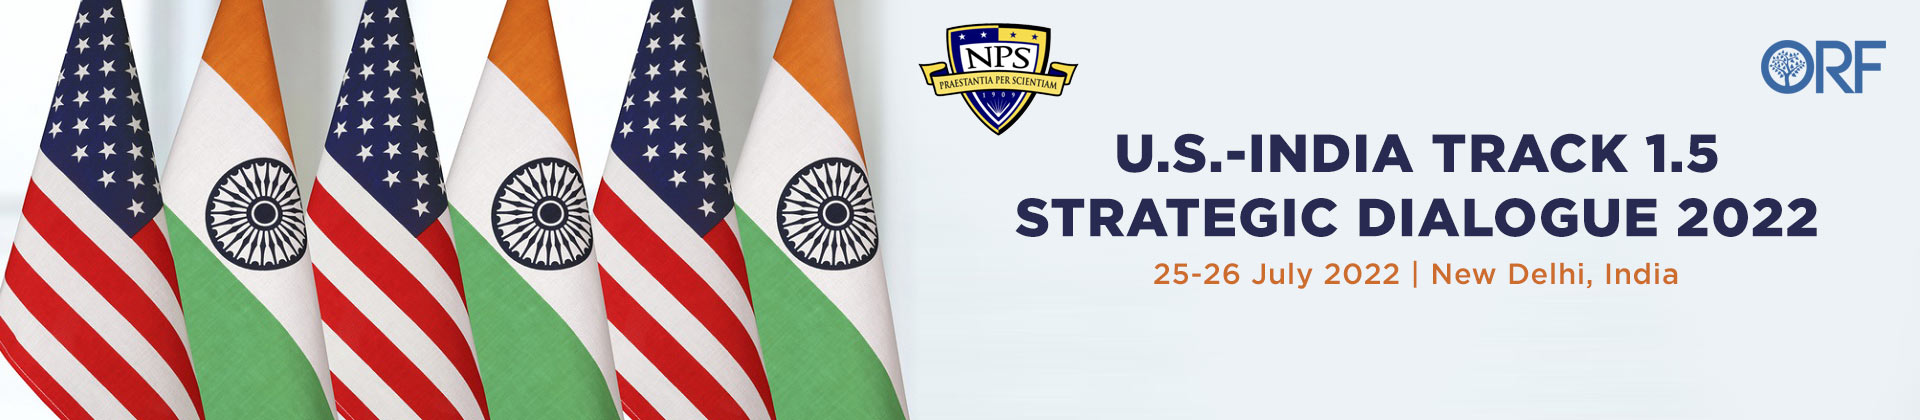 U.S.-INDIA Track 1.5 Strategic Dialogue 2022